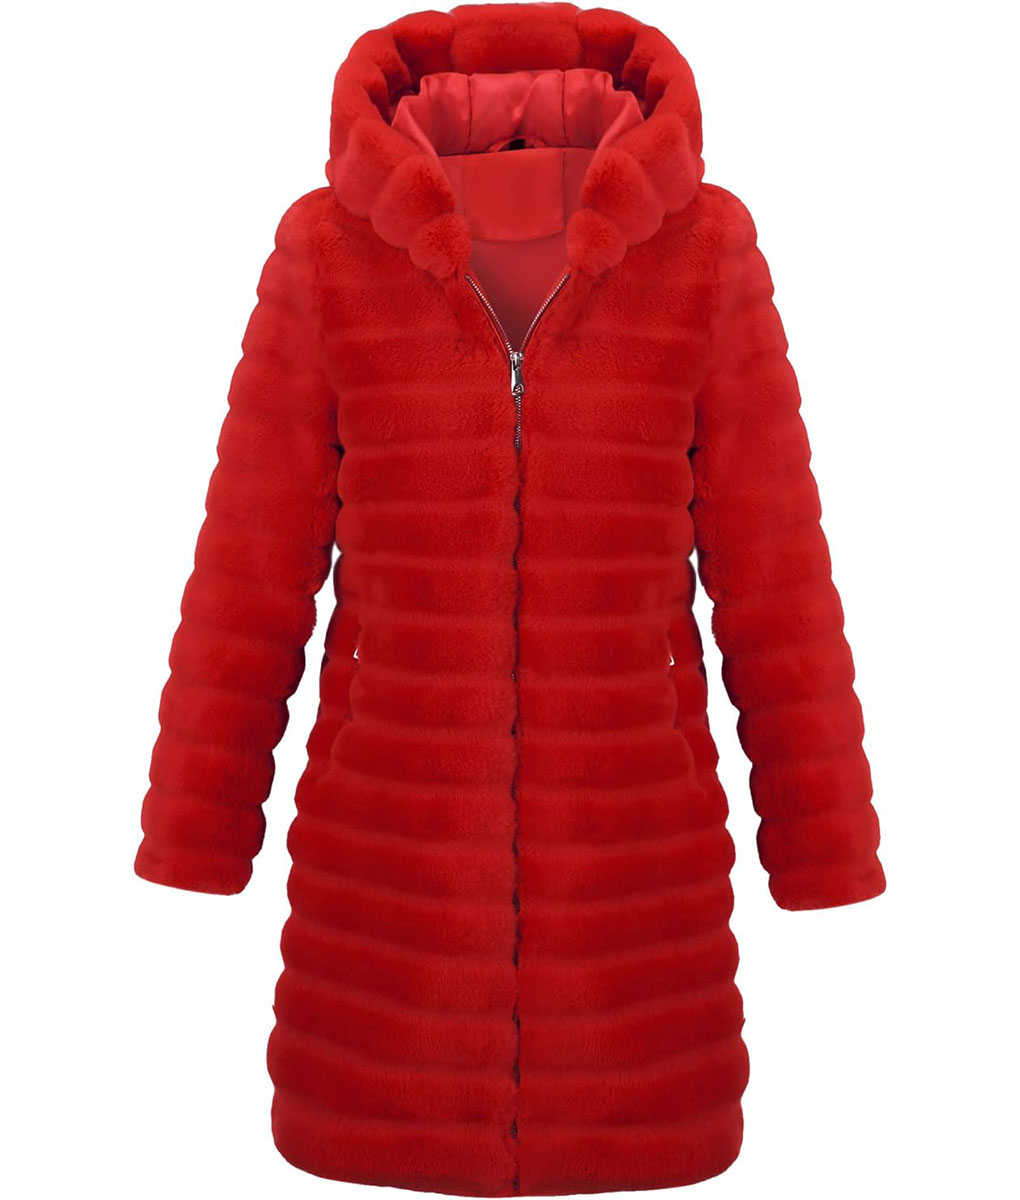 Elsbeth Carrie Preston Red Puffer Fur Coat (1)